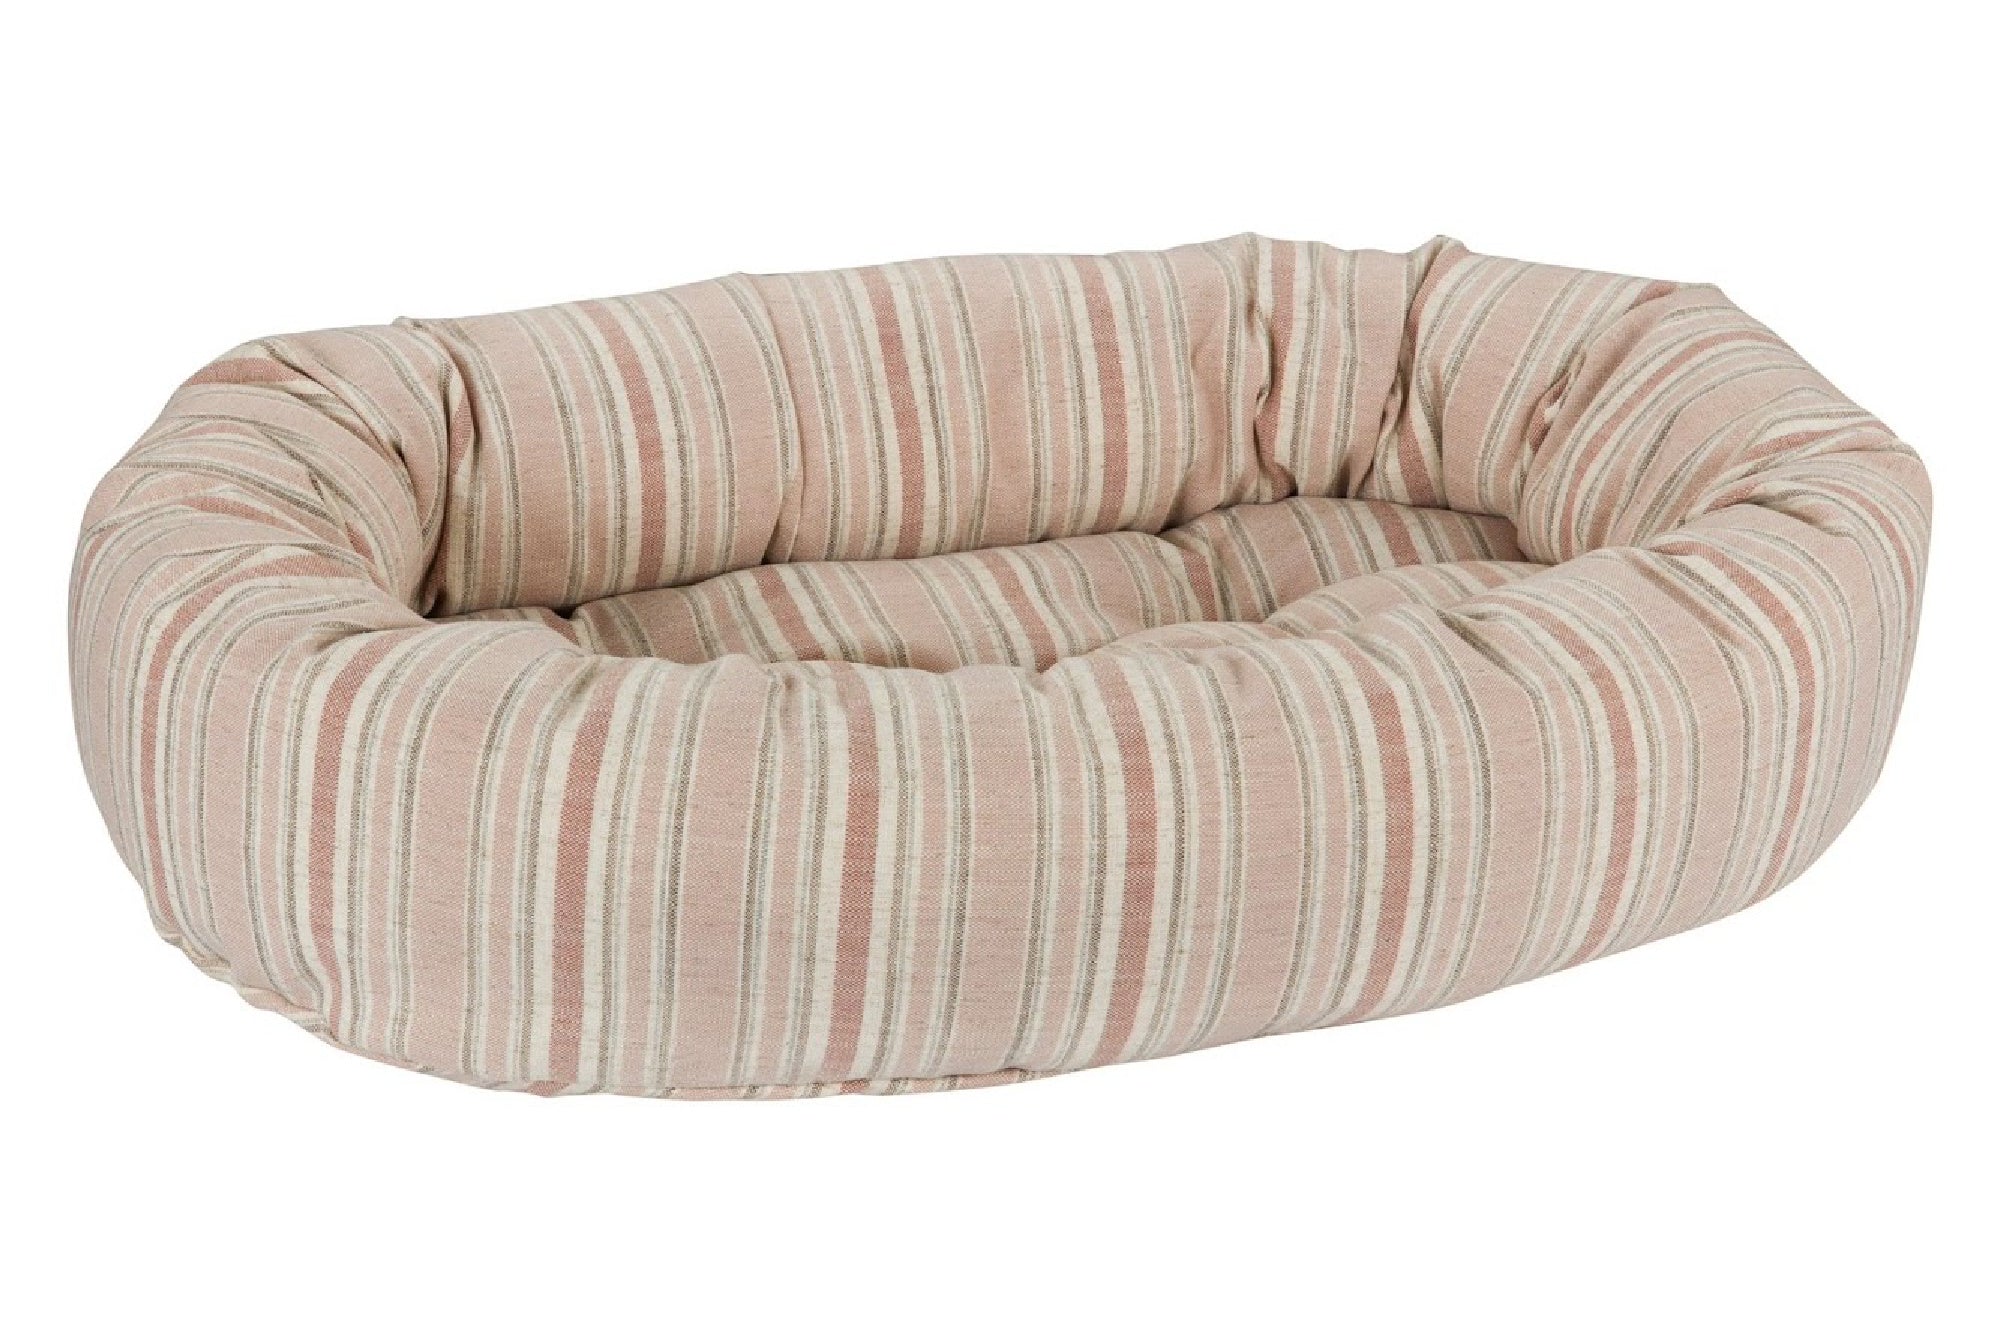 Microvelvet - Donut Bed - Sanibel Stripe - Dog Bed